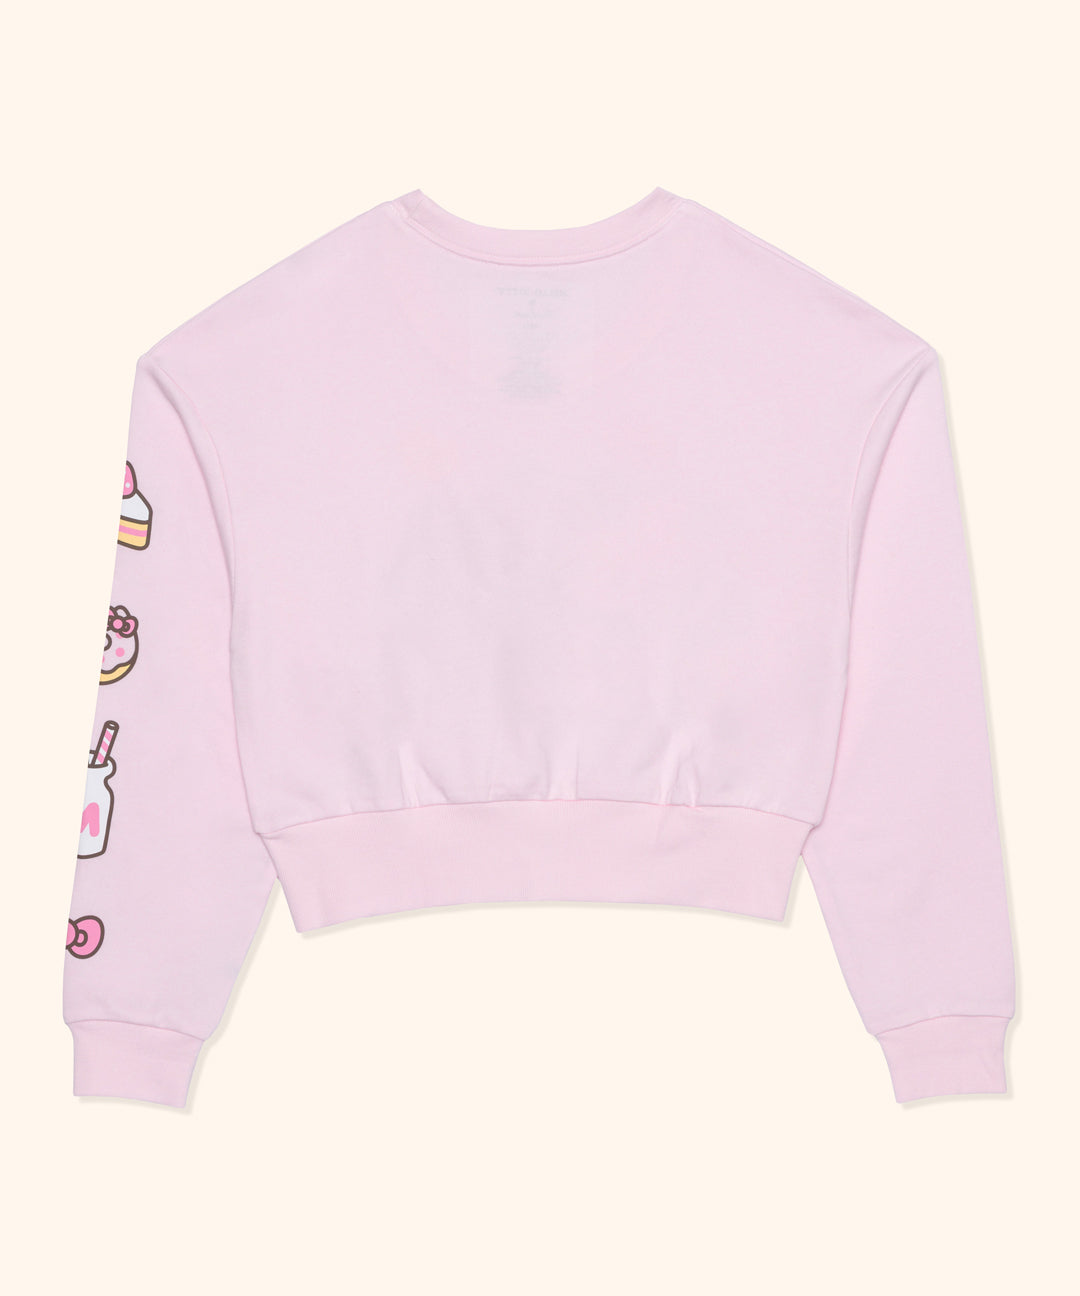 Hello Kitty sweatshirt Color coffee - SINSAY - 4678R-84X